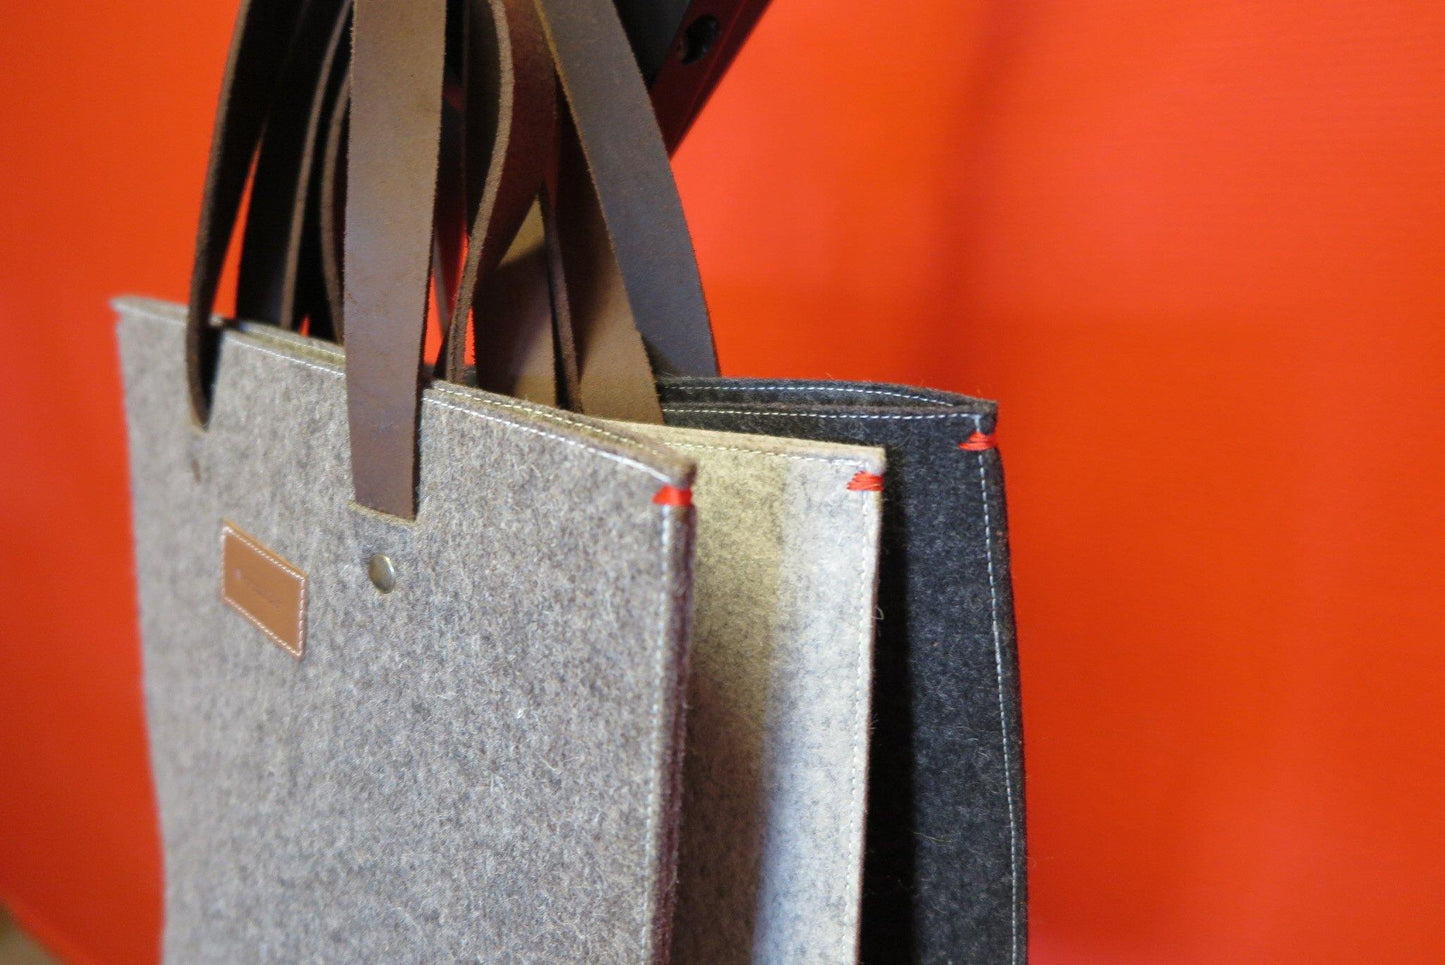 GRIFT tas in zandbruin vilt laptoptas - pure wol - minimalistisch ontwerp - Westerman Bags vilten tassen en hoezen. Dutch Design.